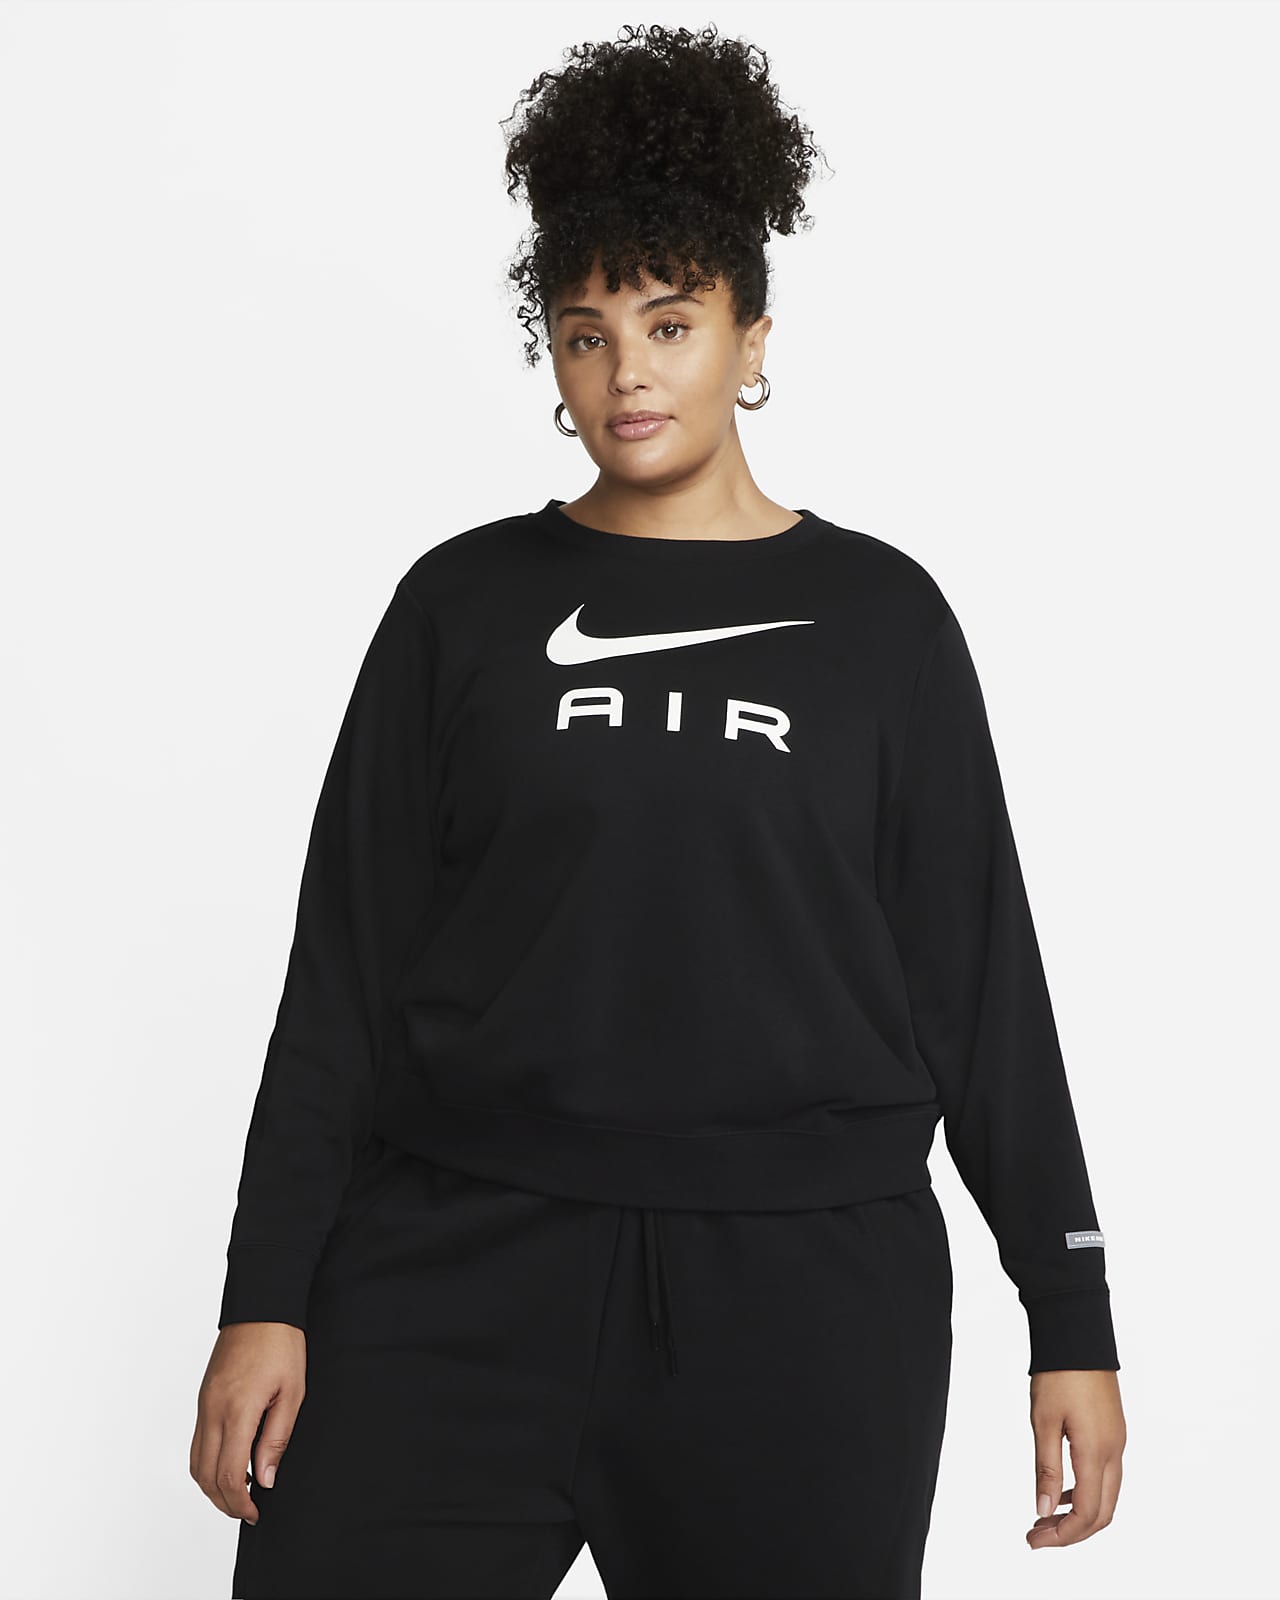 Nike Air Women's Fleece Sweatshirt (Plus Size). UK